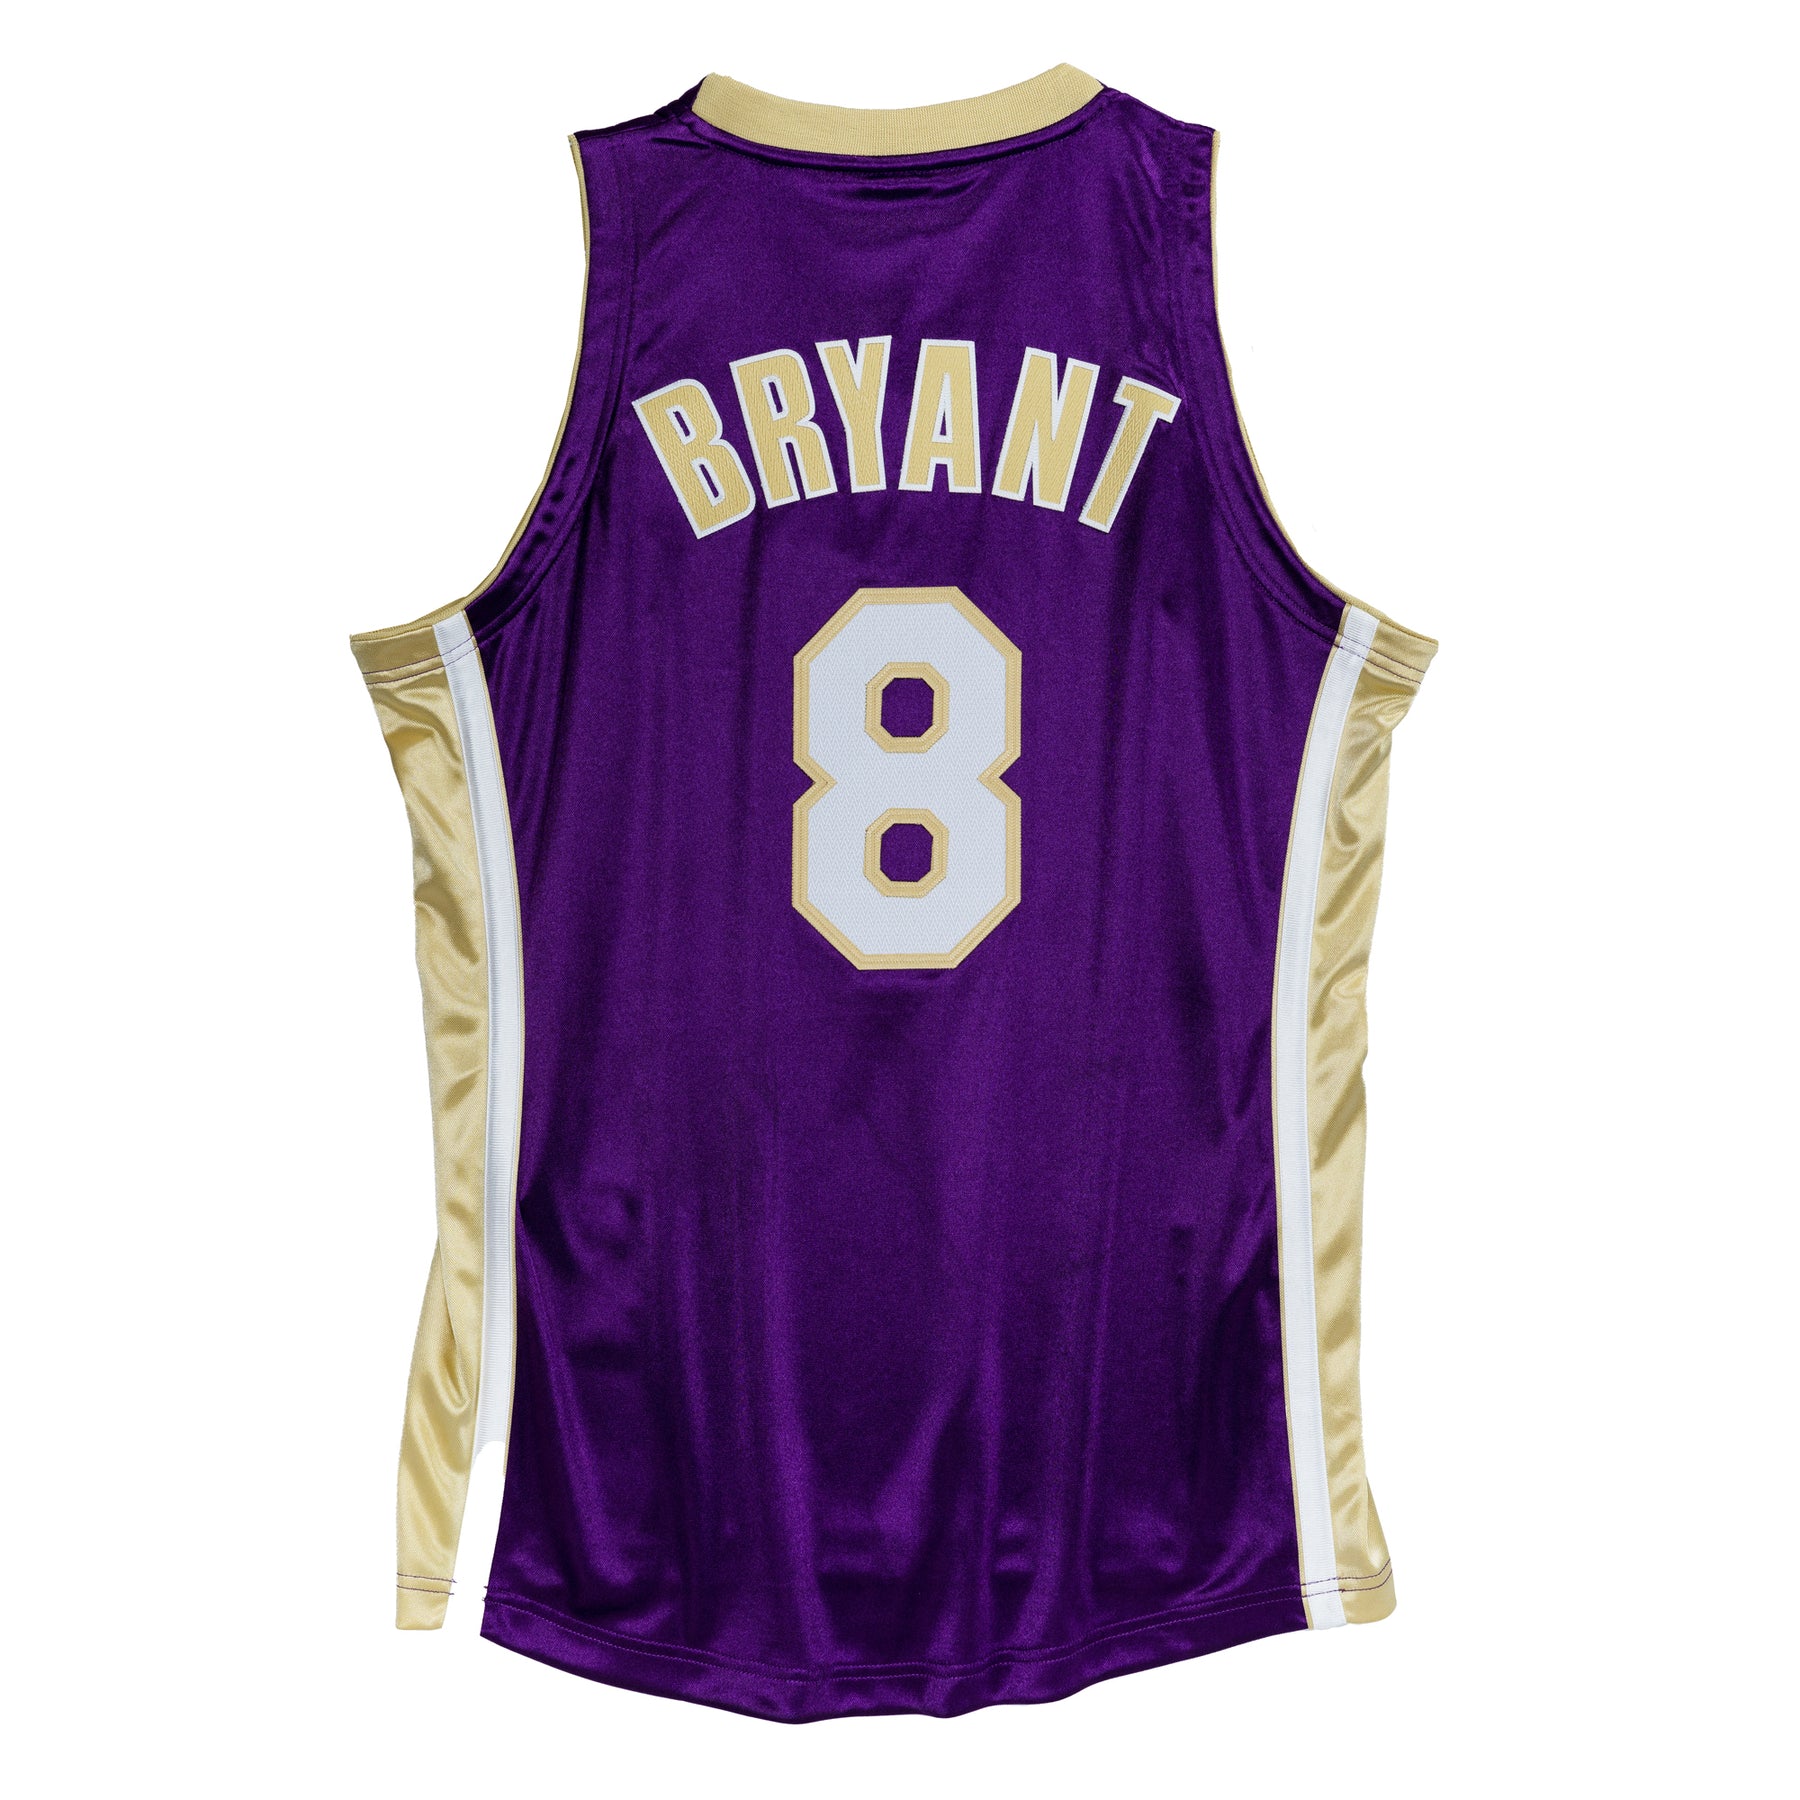 Authentic Los Angeles Lakers #8 Kobe Bryant Mamba City Edition Jersey  AJ6432-010